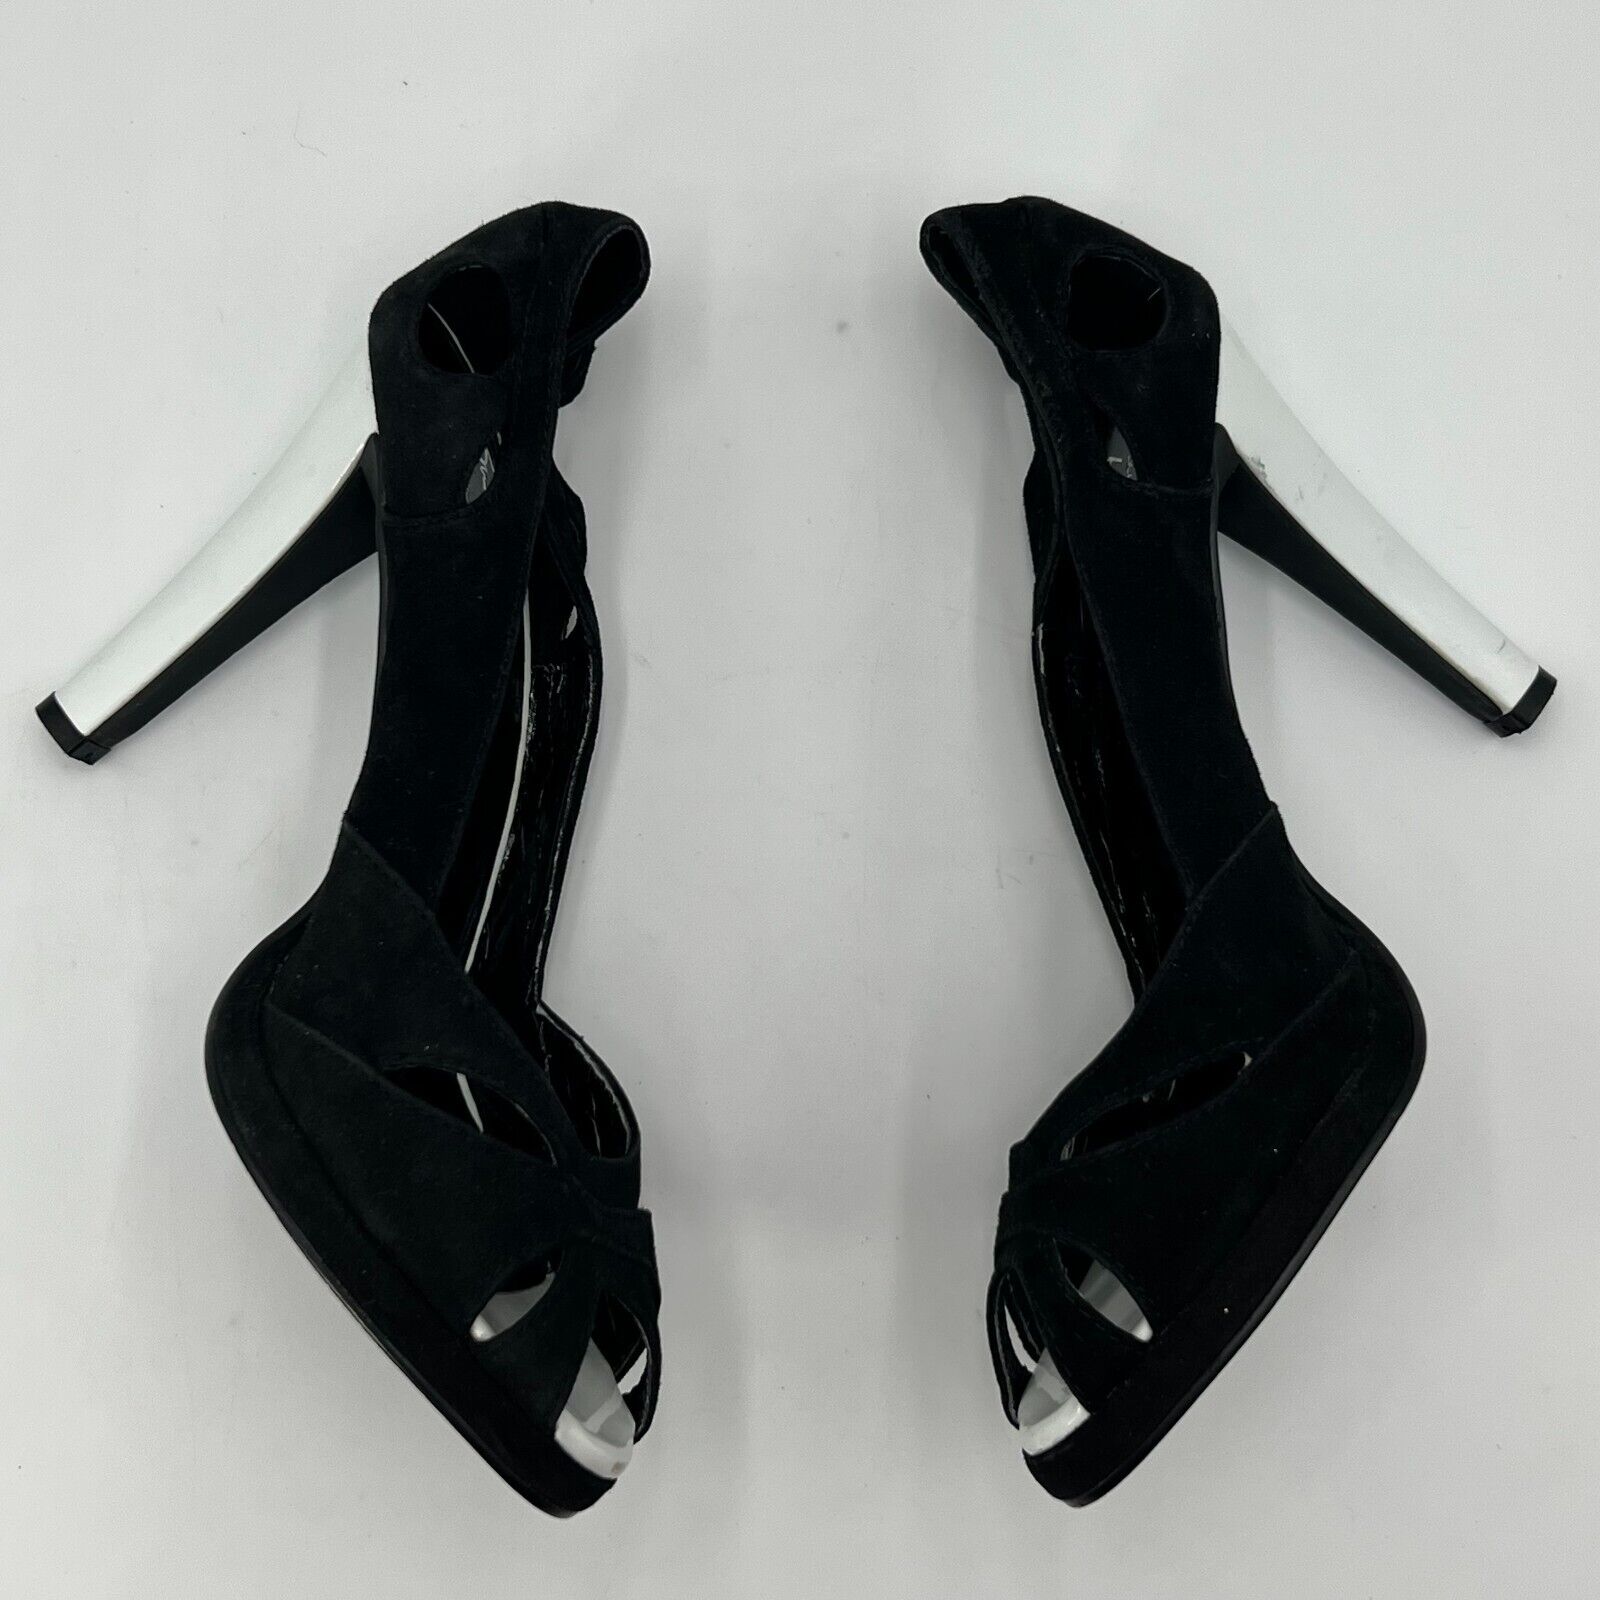 Susan Lucci Designer Pumps 4.5 inch Heel Black Leather Open Toe Womens Size 10M